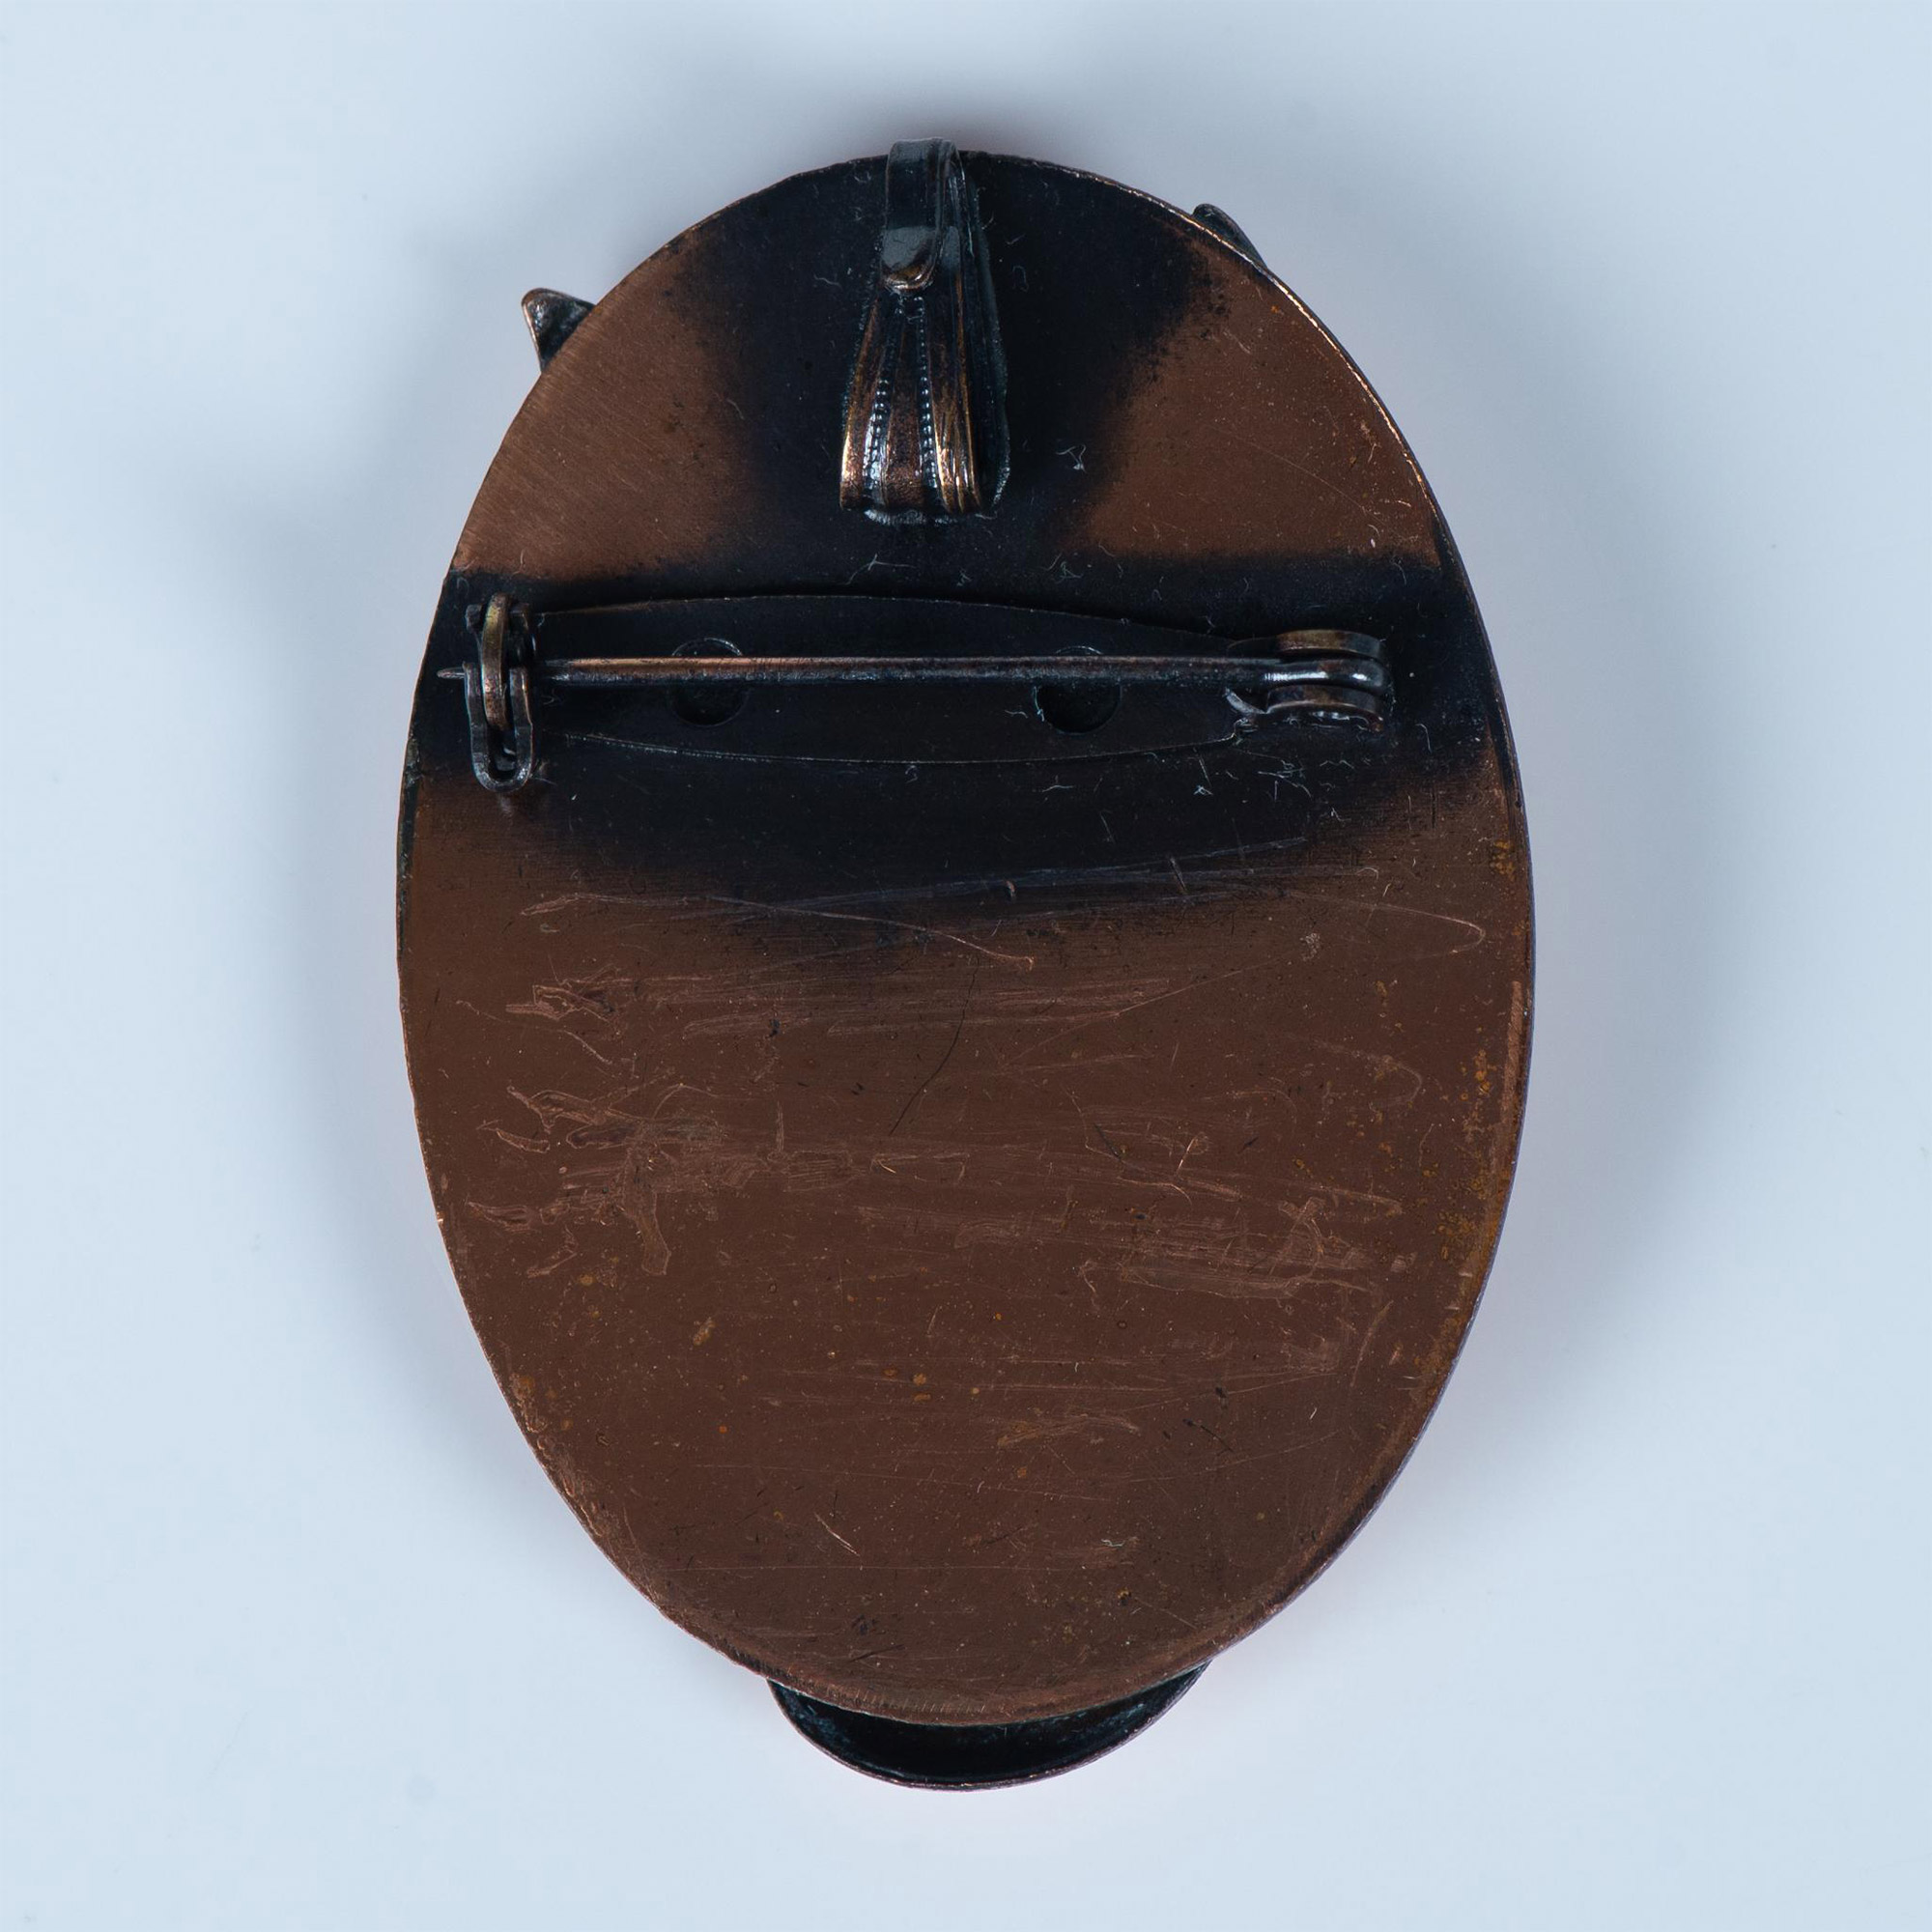 Beautiful Copper Metal Leaf Pendant Brooch - Image 2 of 3